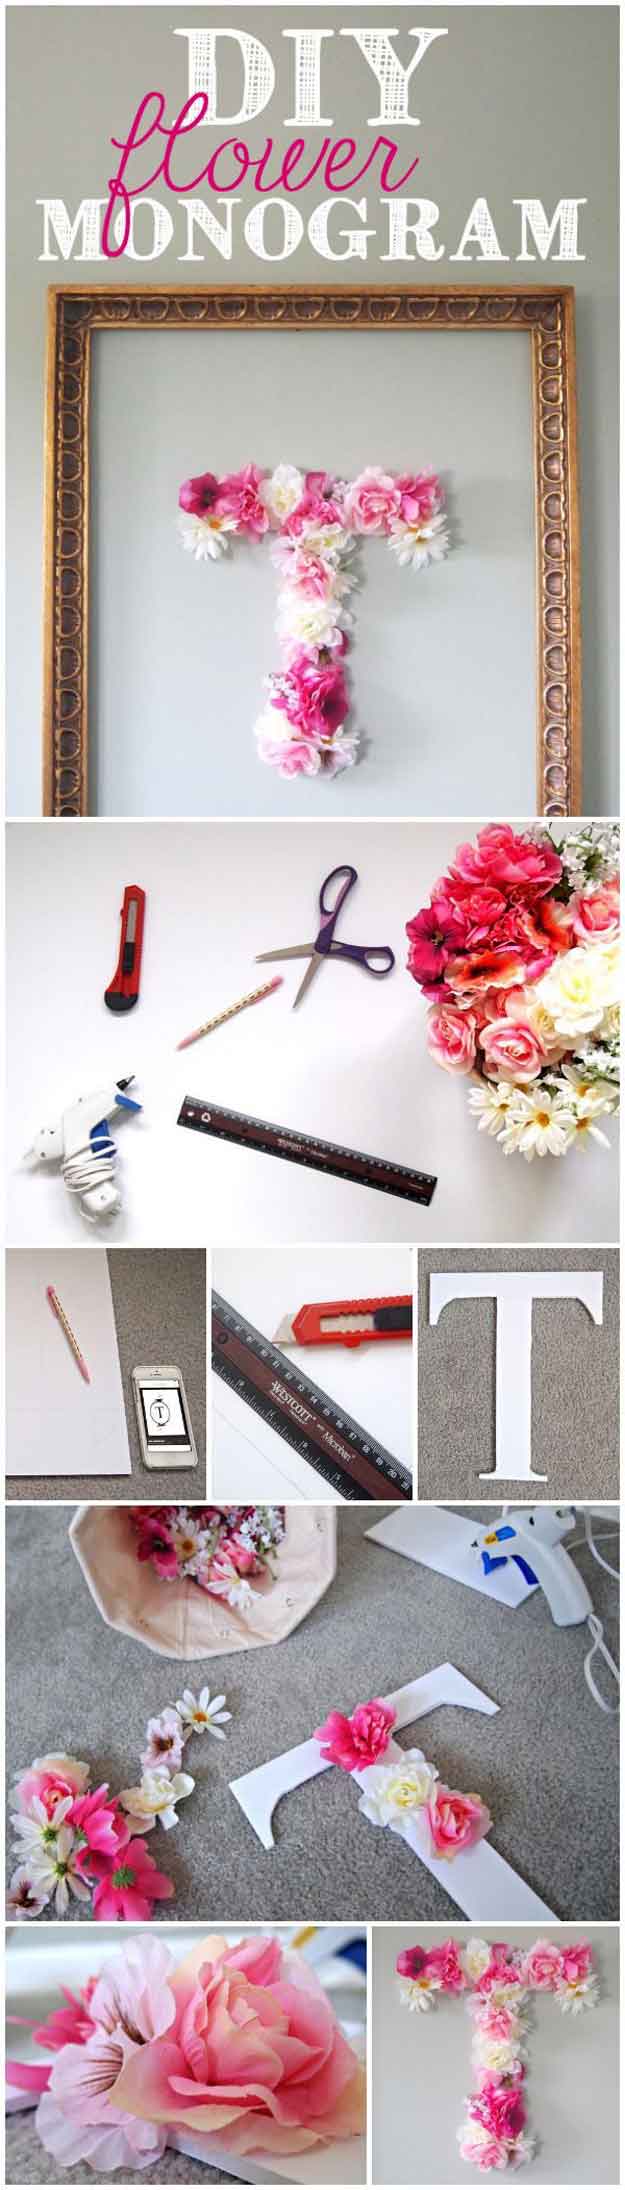 DIY-Projects-for-Teens-Bedroom-Flower-monogram1